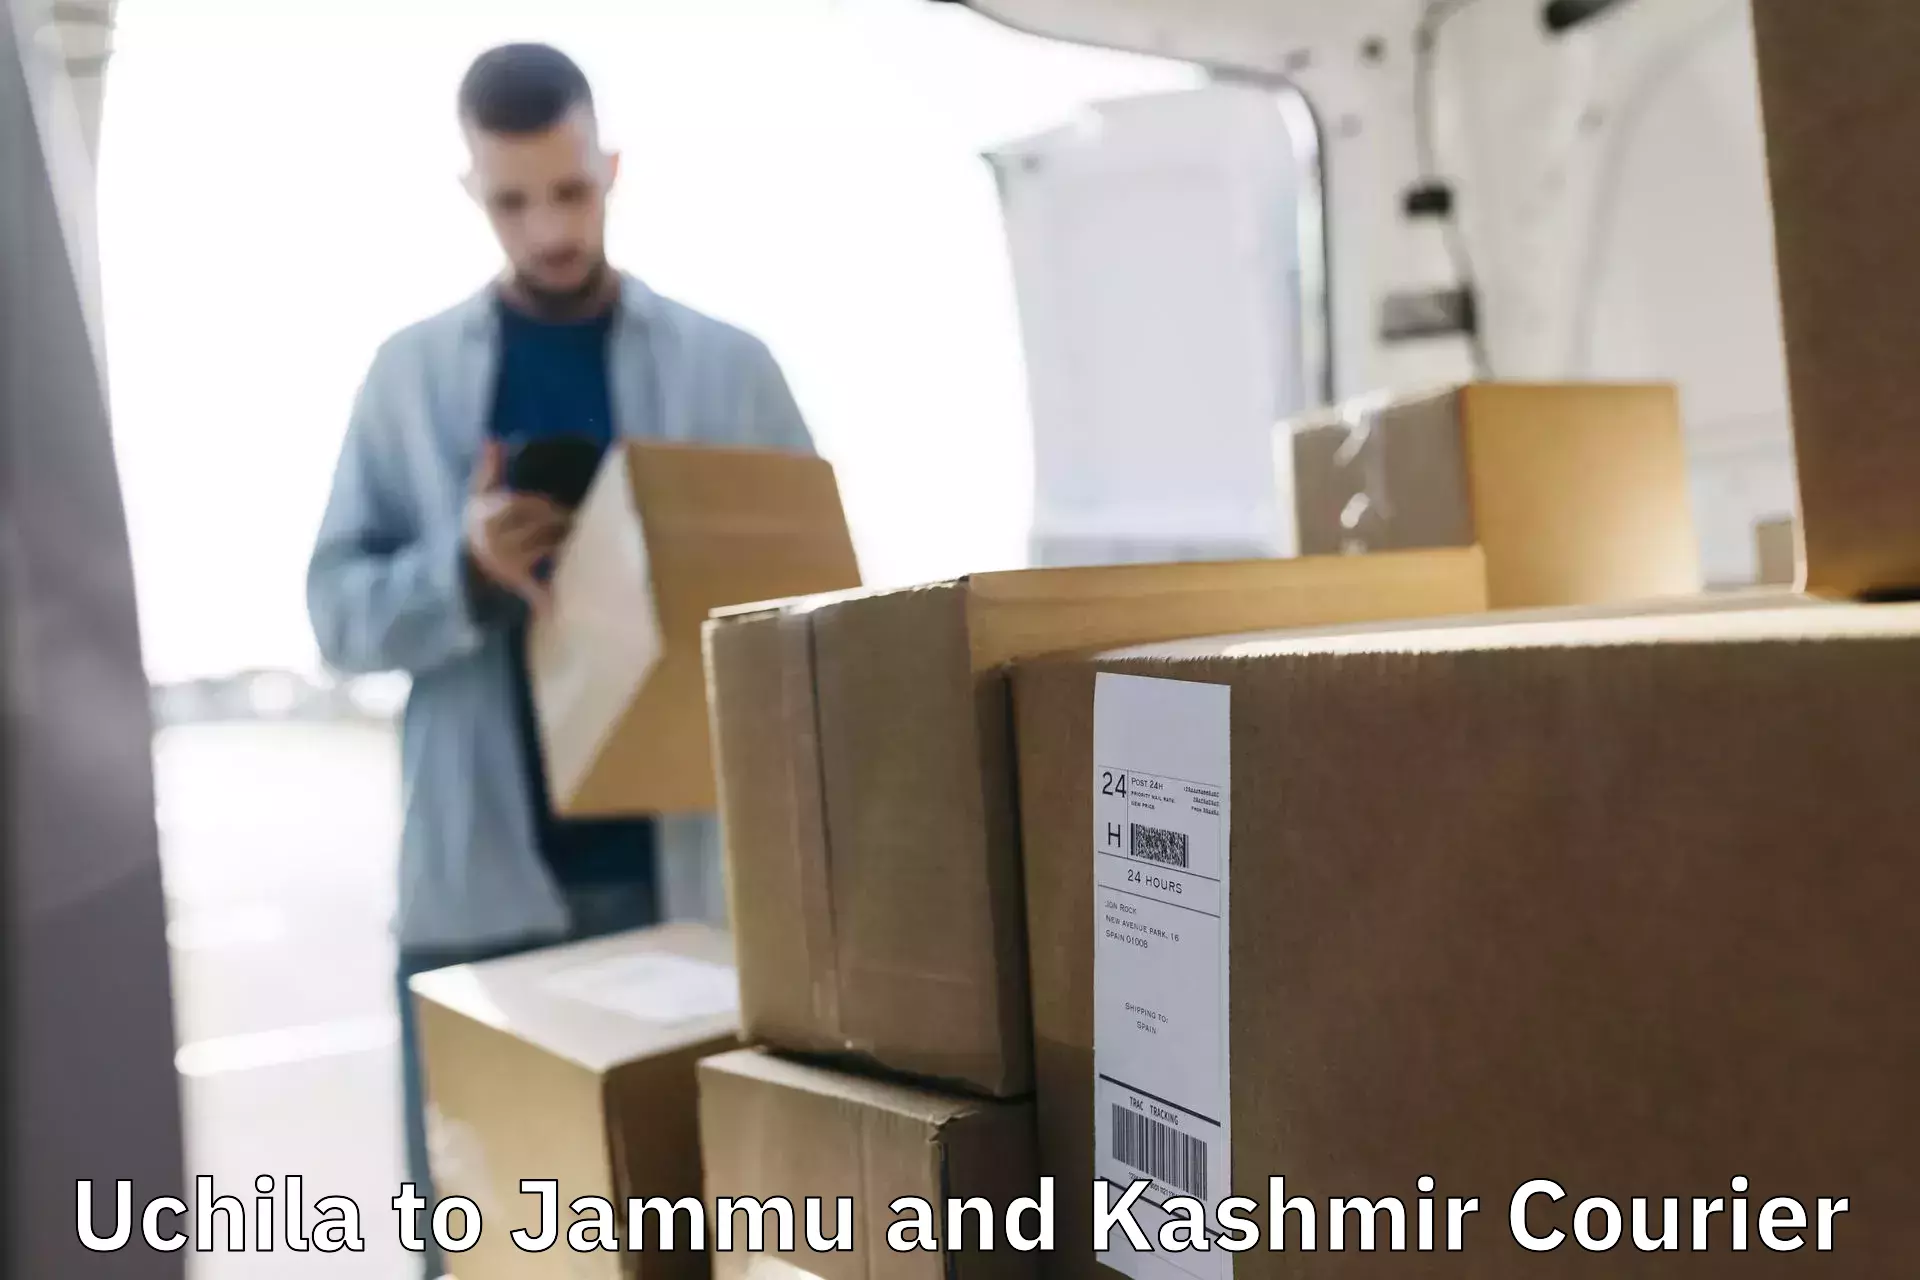 Cargo courier service Uchila to Srinagar Kashmir